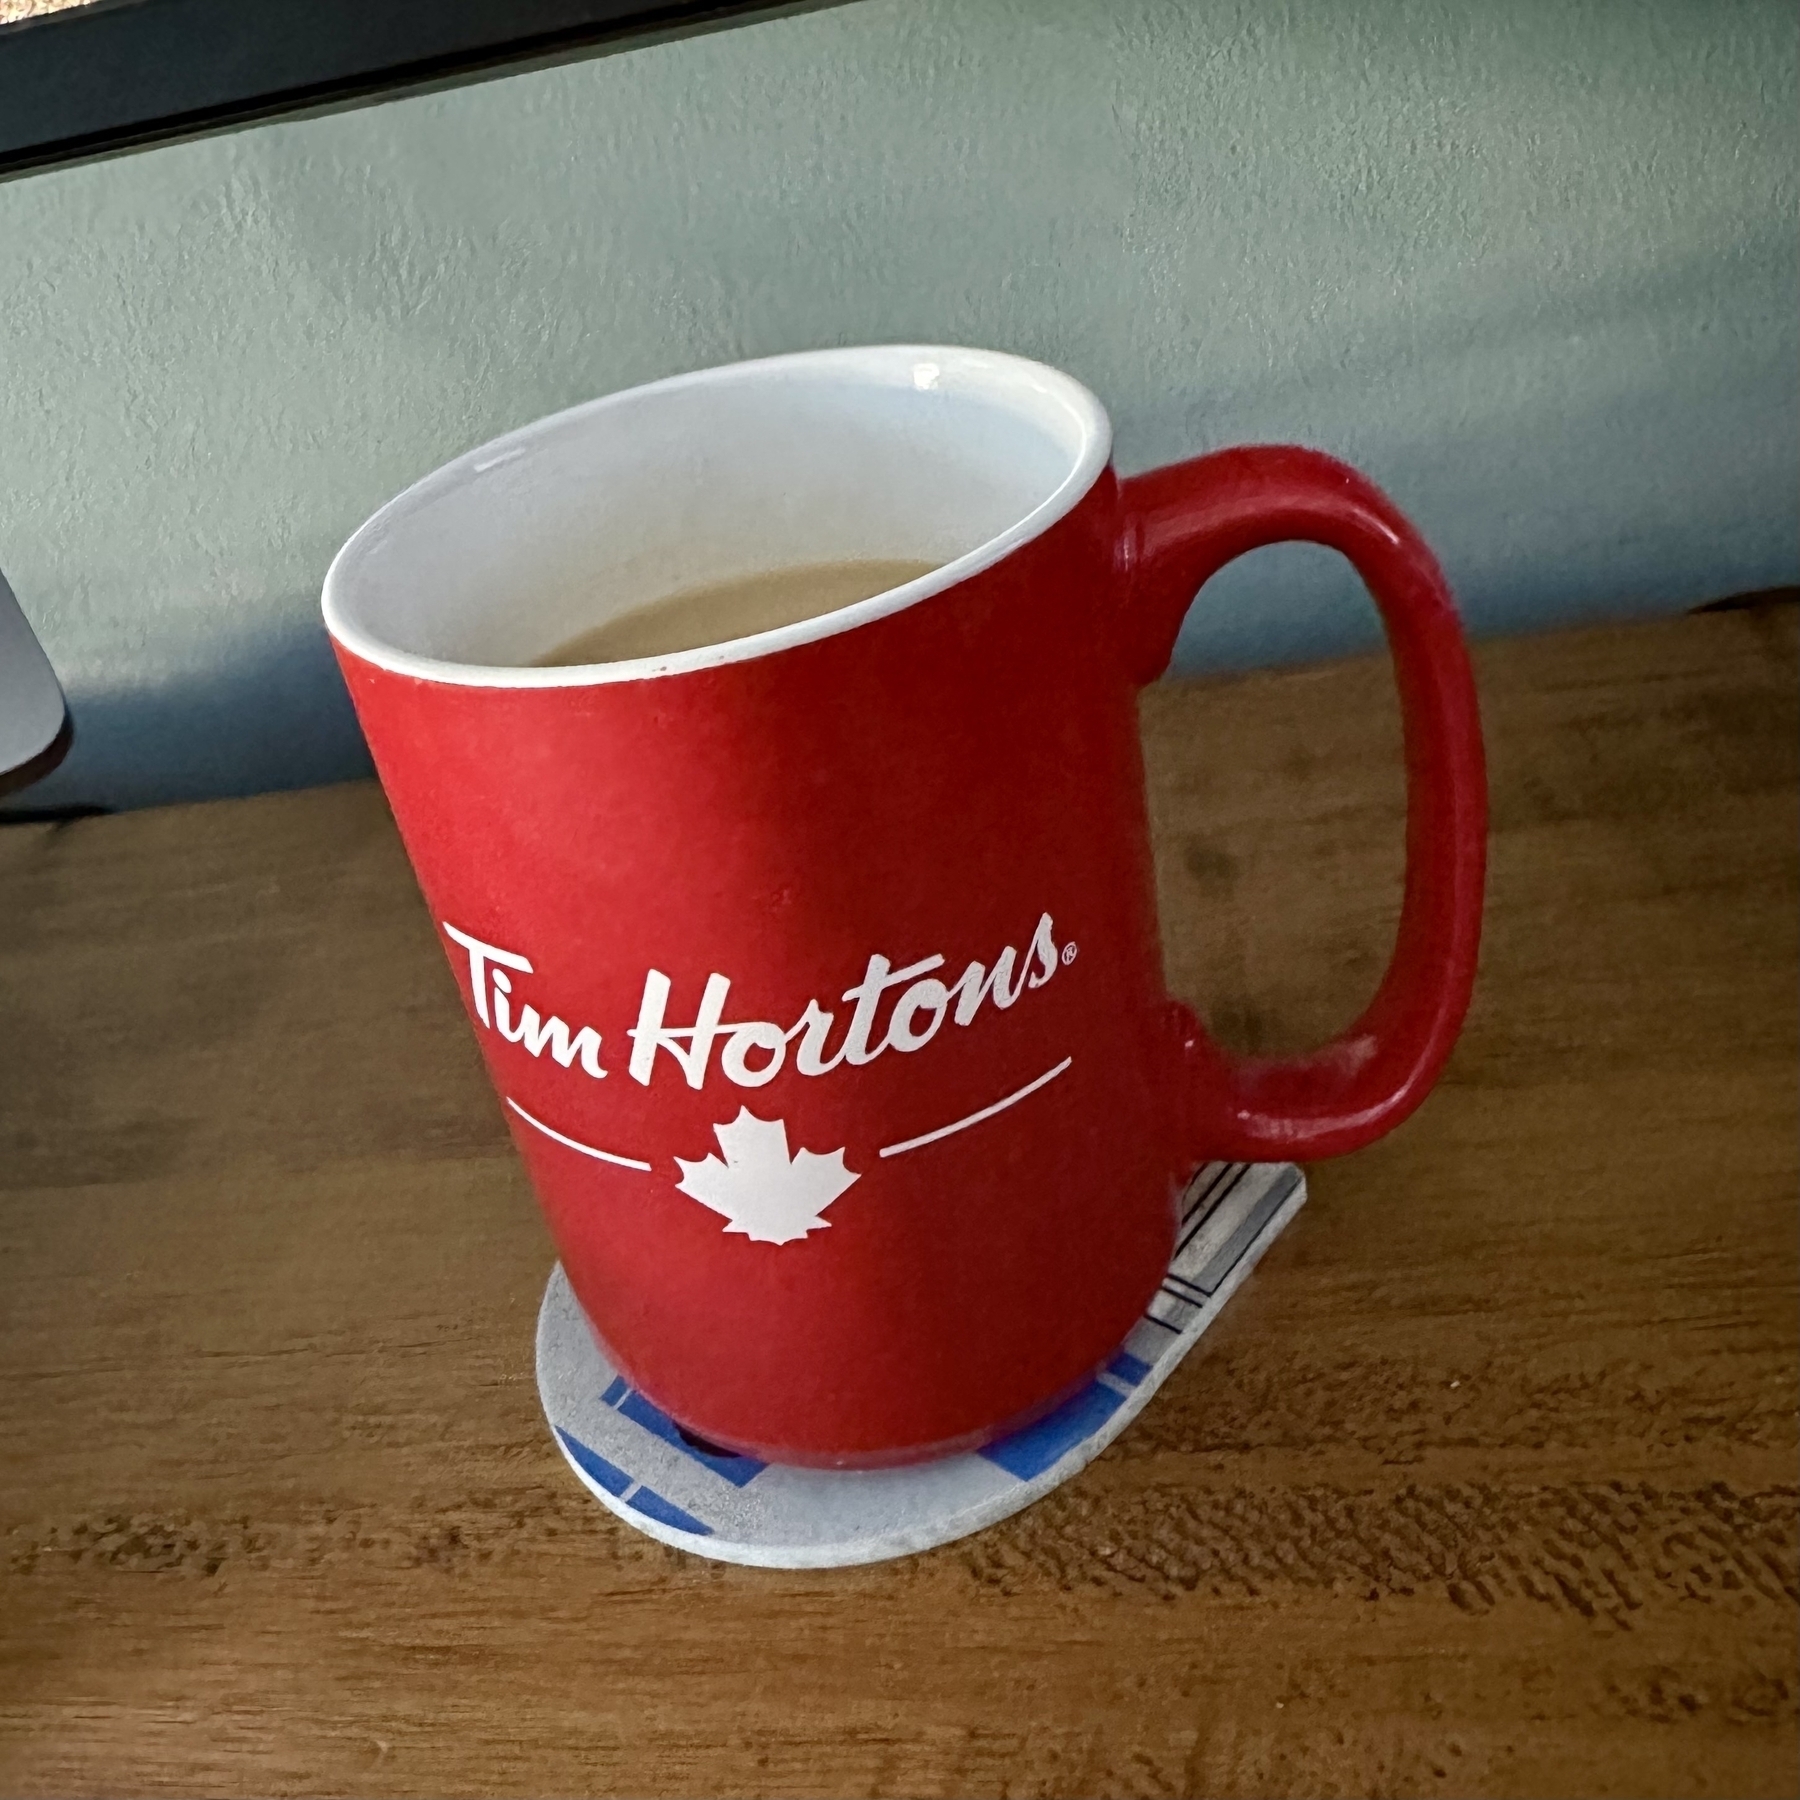 A mug of tea on a desk.